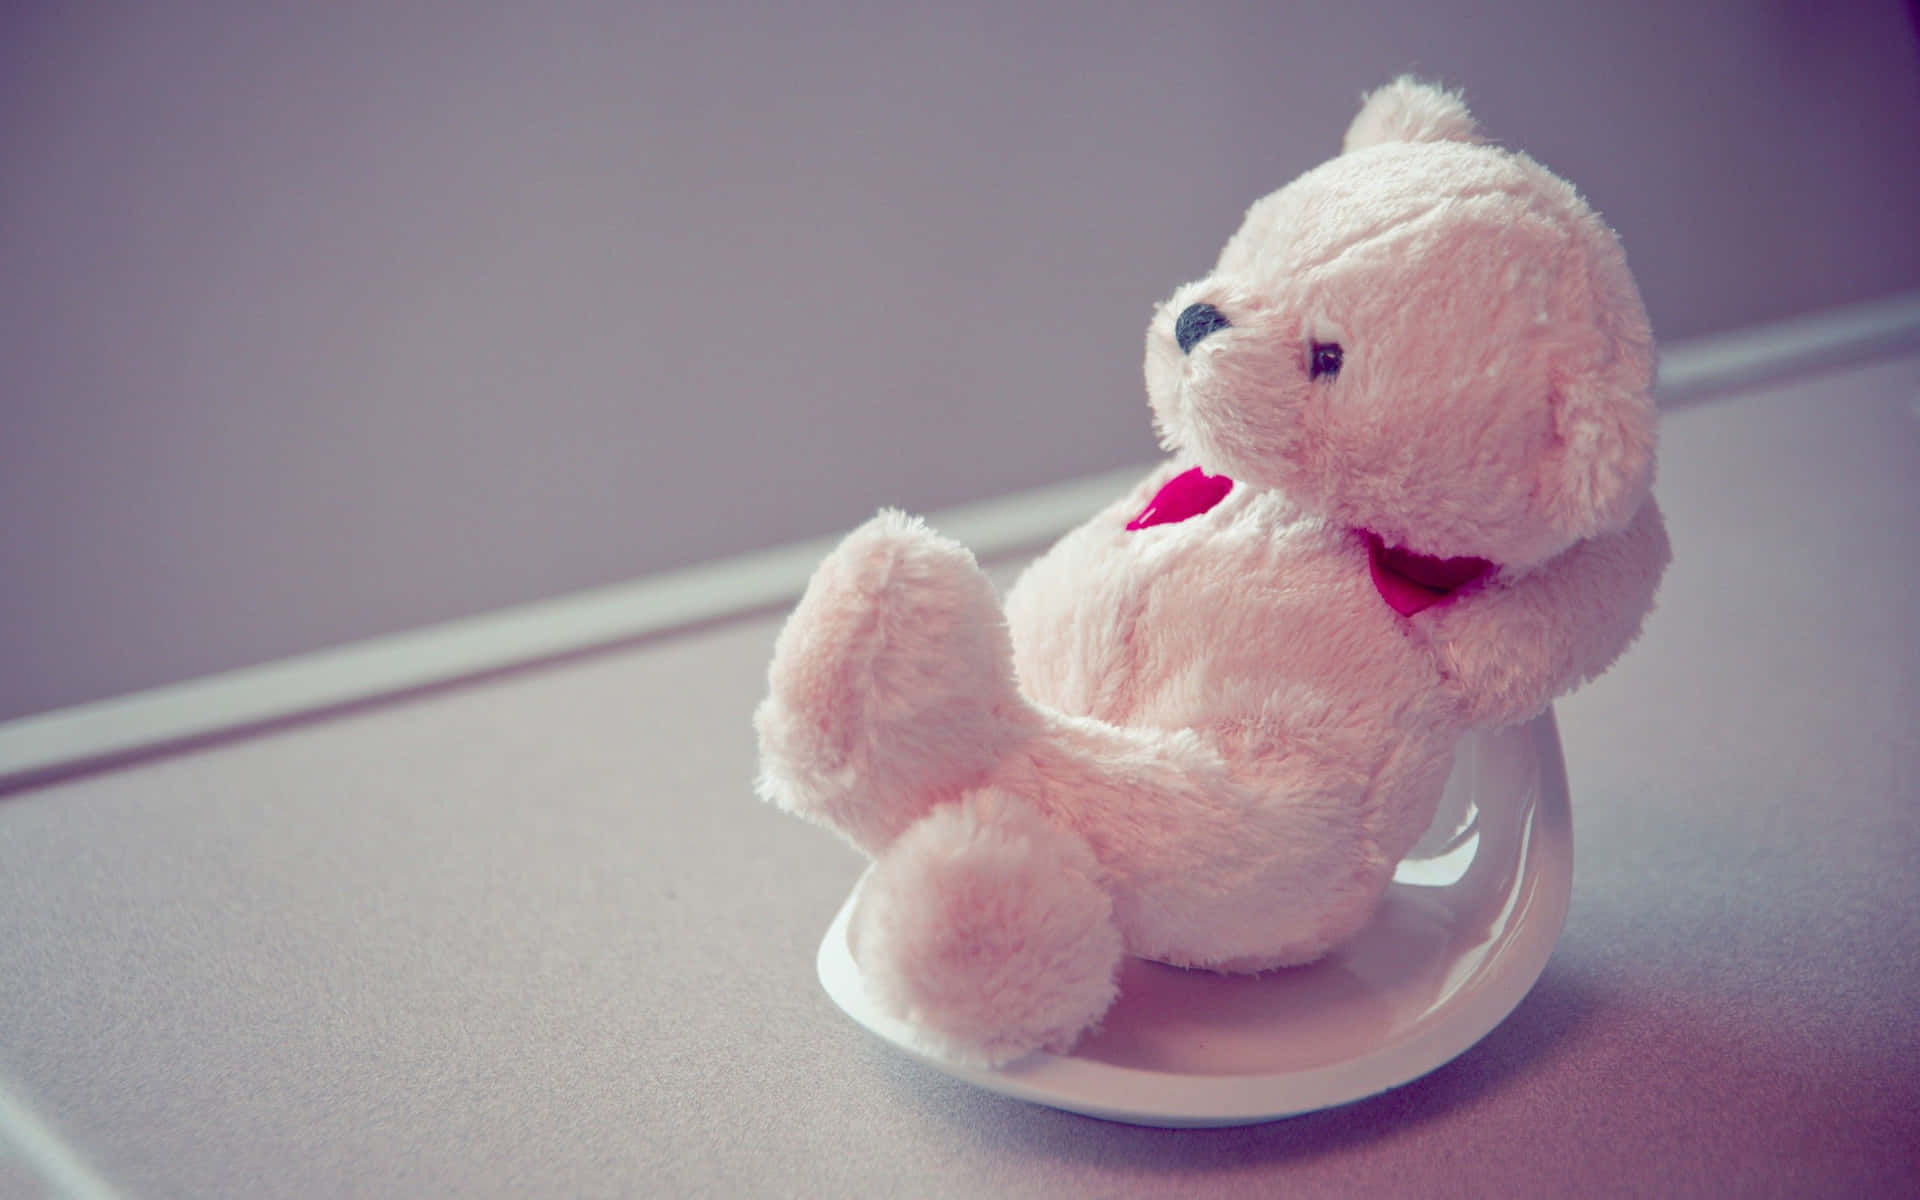 Cute Background Of White Teddy Bear Plushie